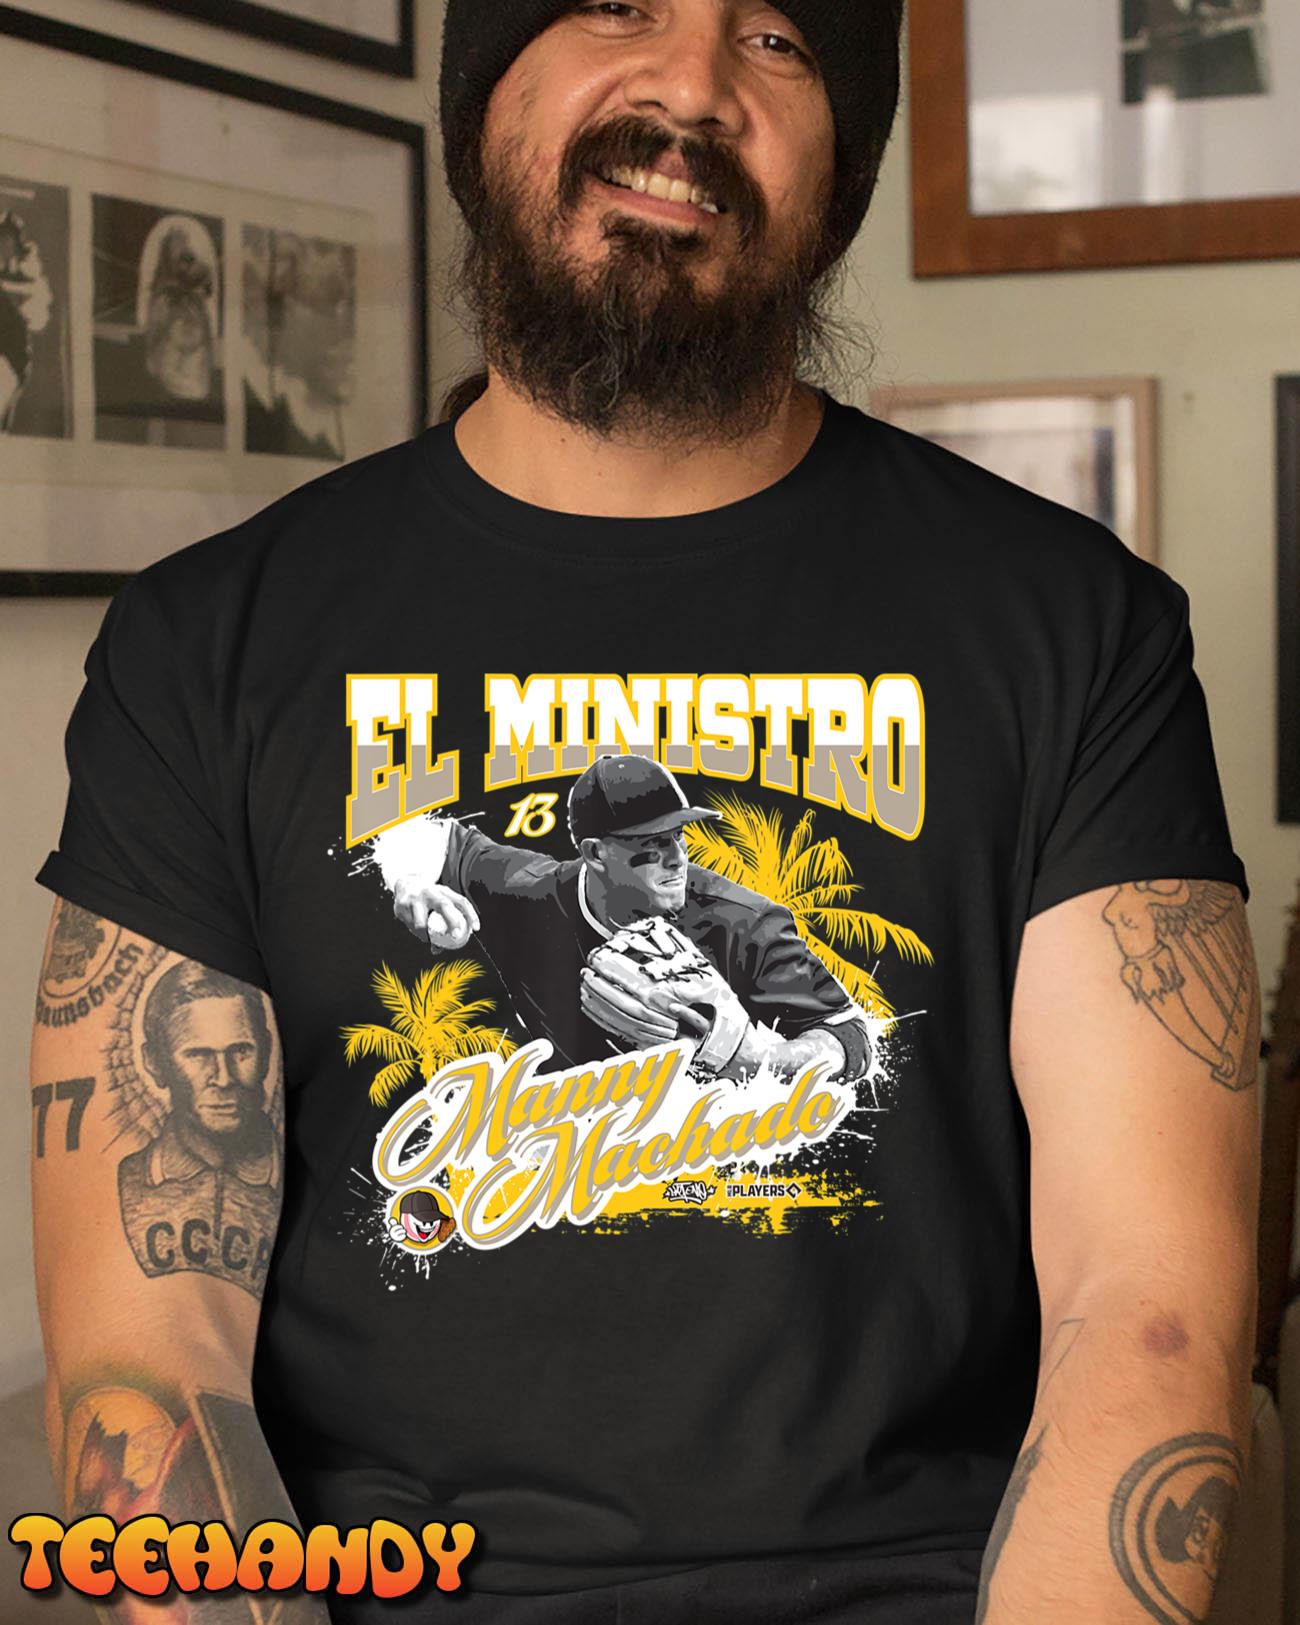 Manny Machado San Diego Baseball Sket One x MLB Players T-Shirt